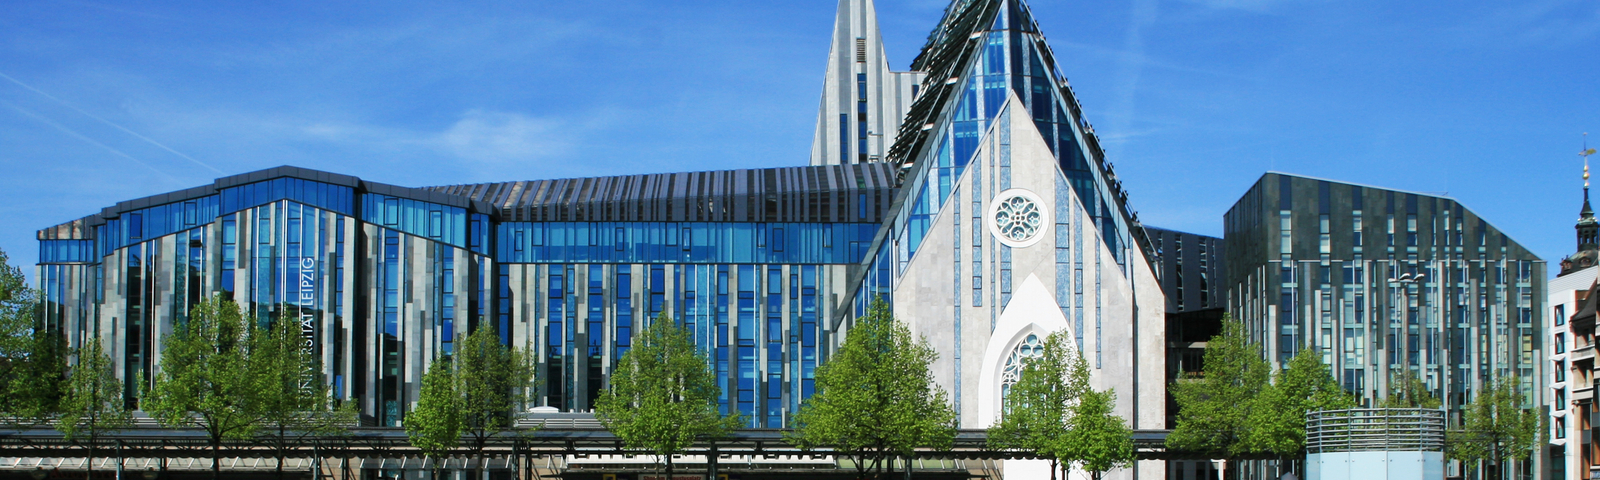 Référence - Referenzbericht: Augustkirche/ Universität Leipzig, Leipzig